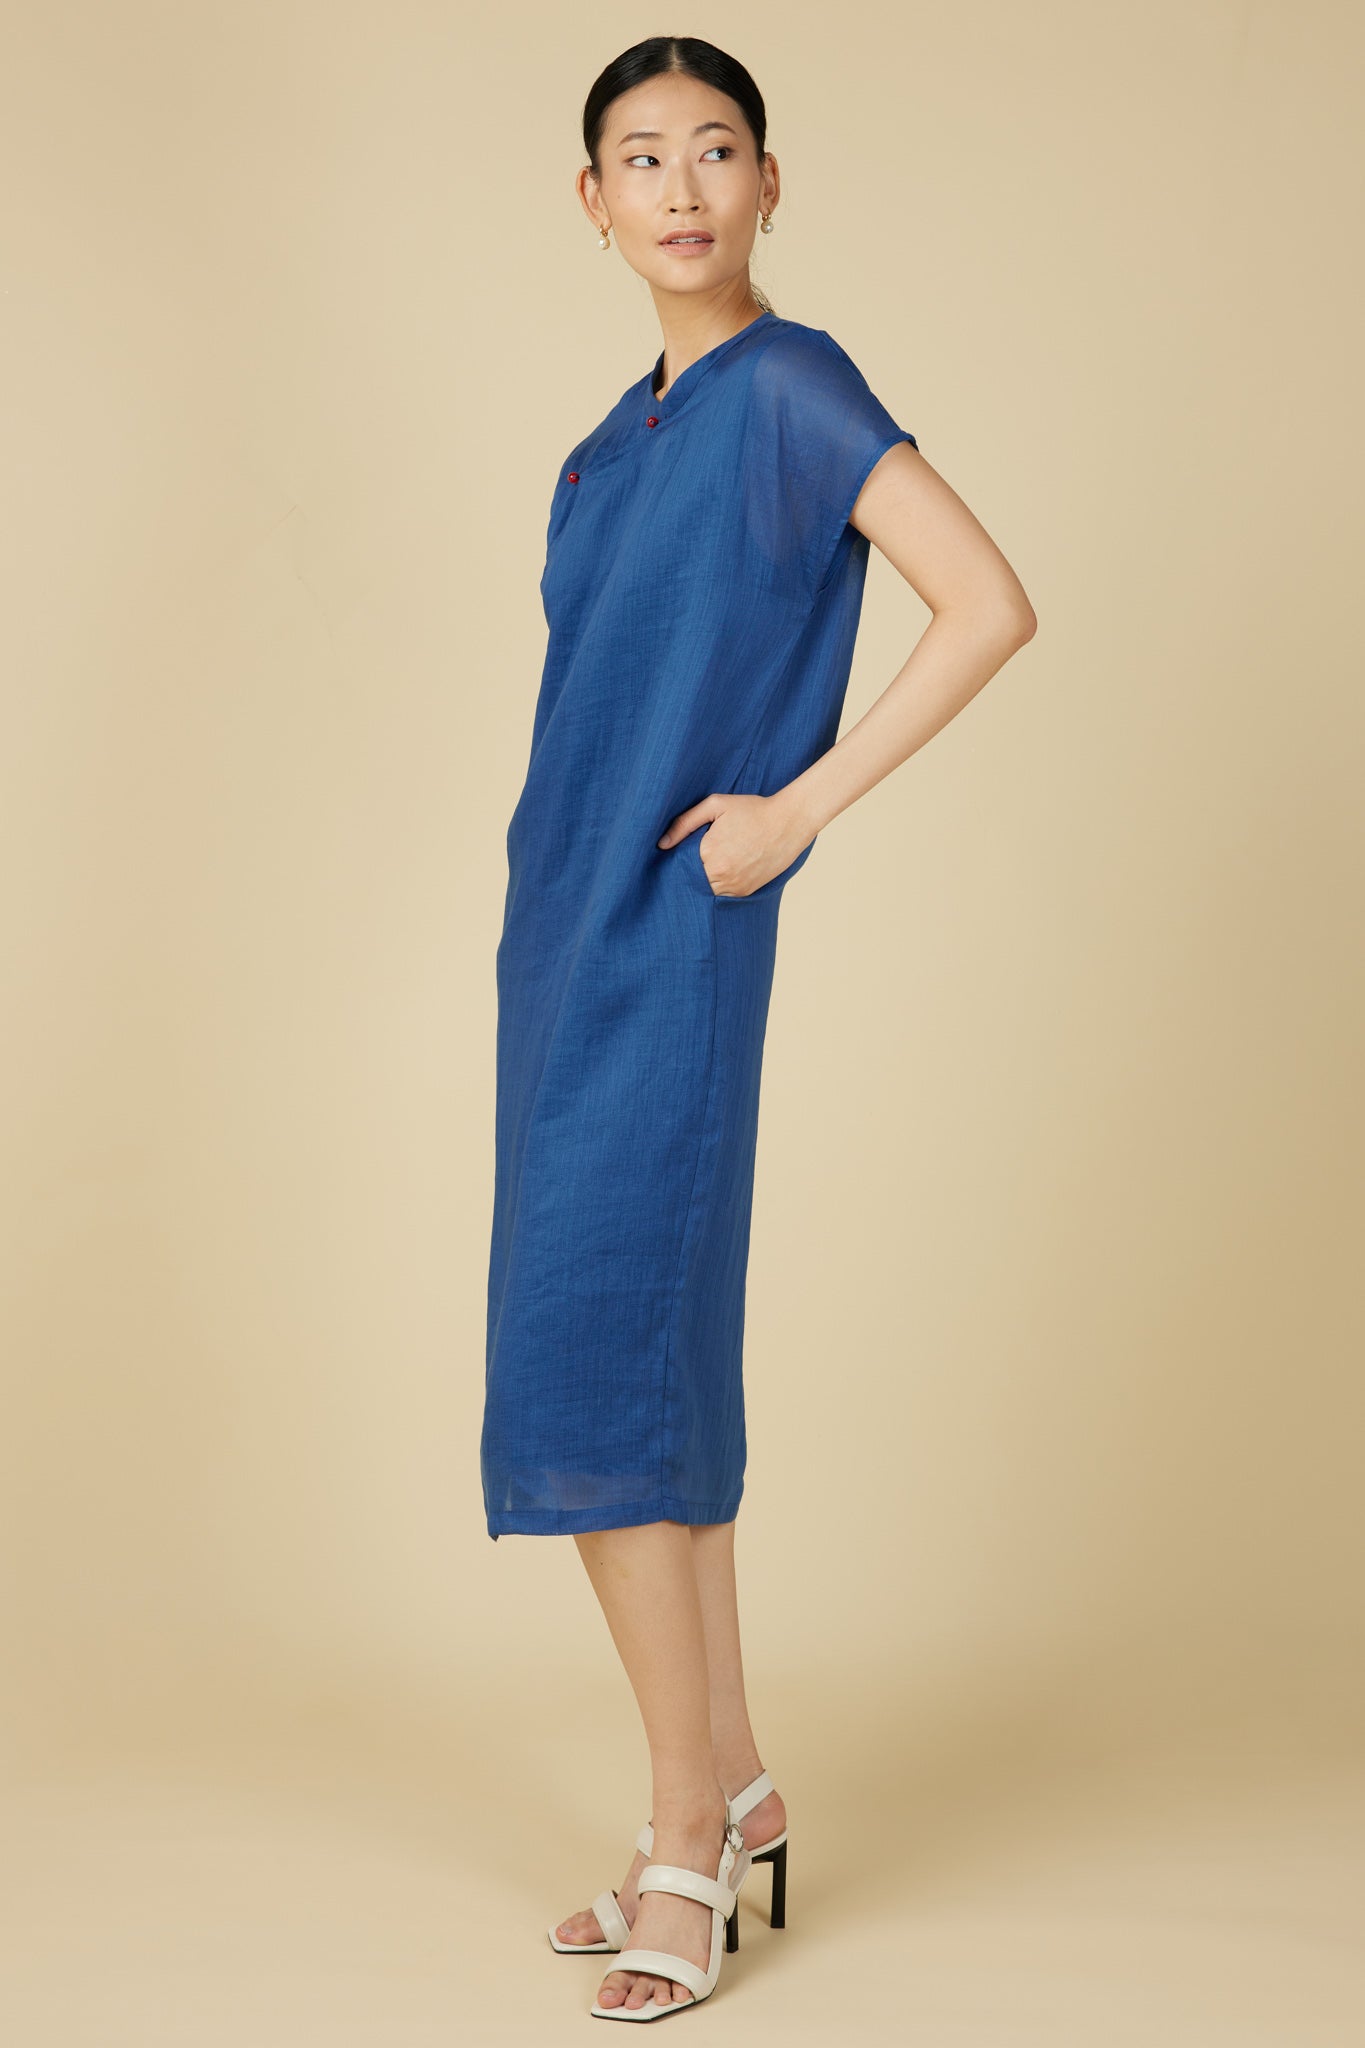 Minimalist Cheongsam Dress in Blue